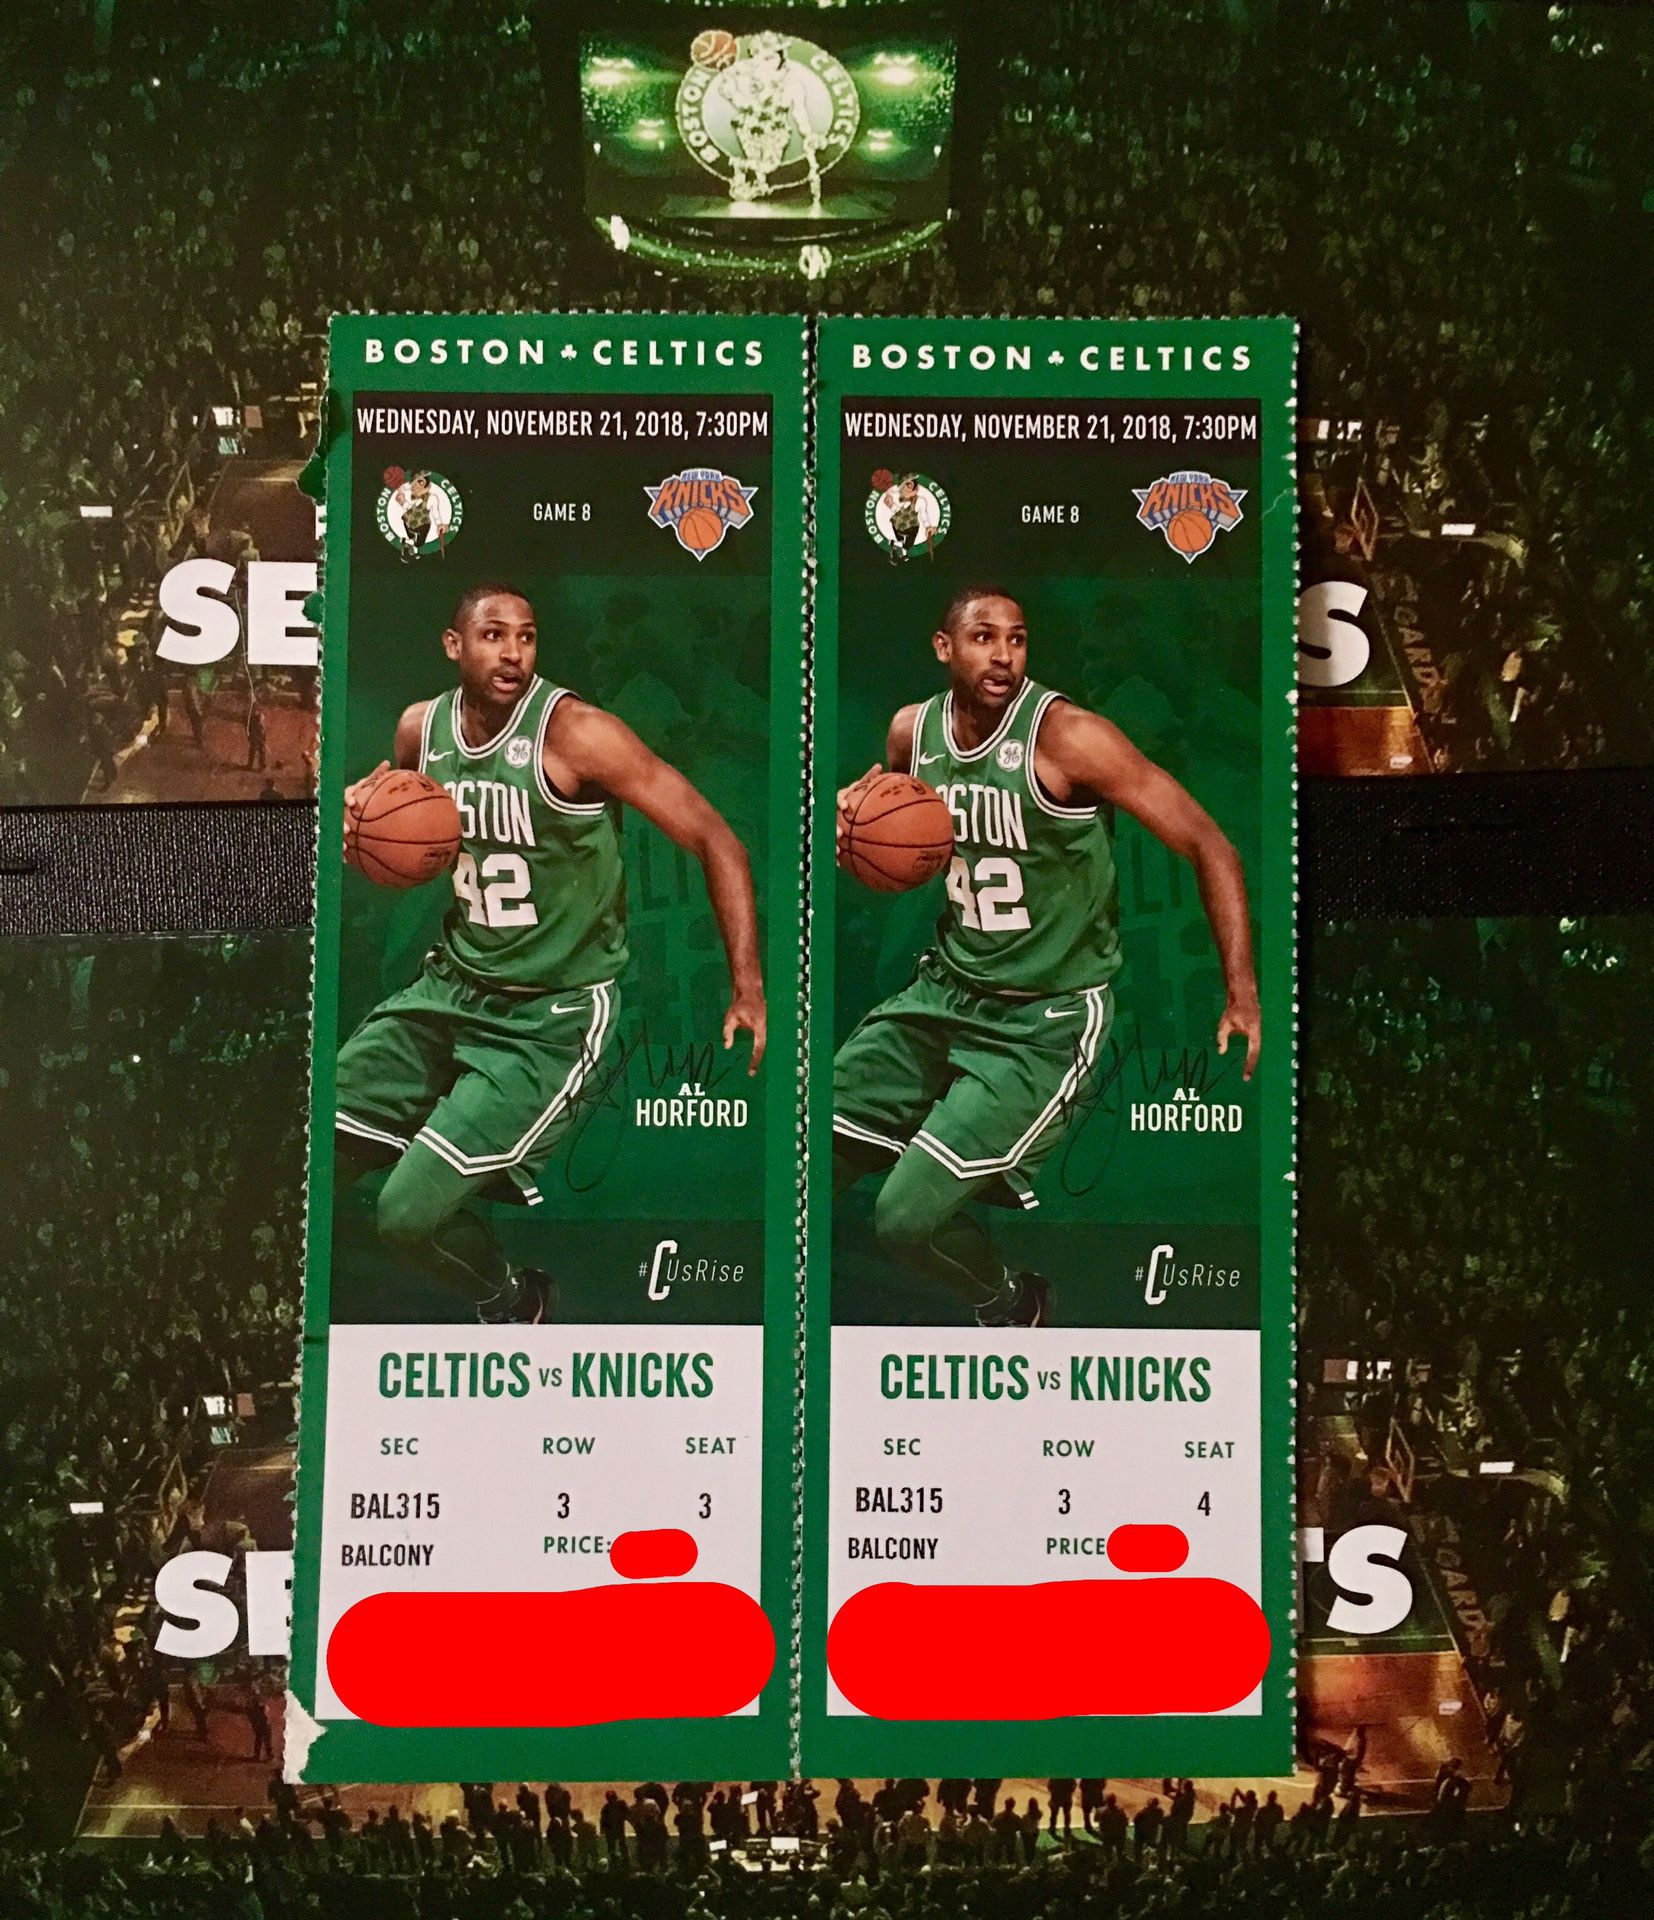 2 Tickets Celtics vs Knicks Wednesday November 21st 7:00PM @ TD Garden